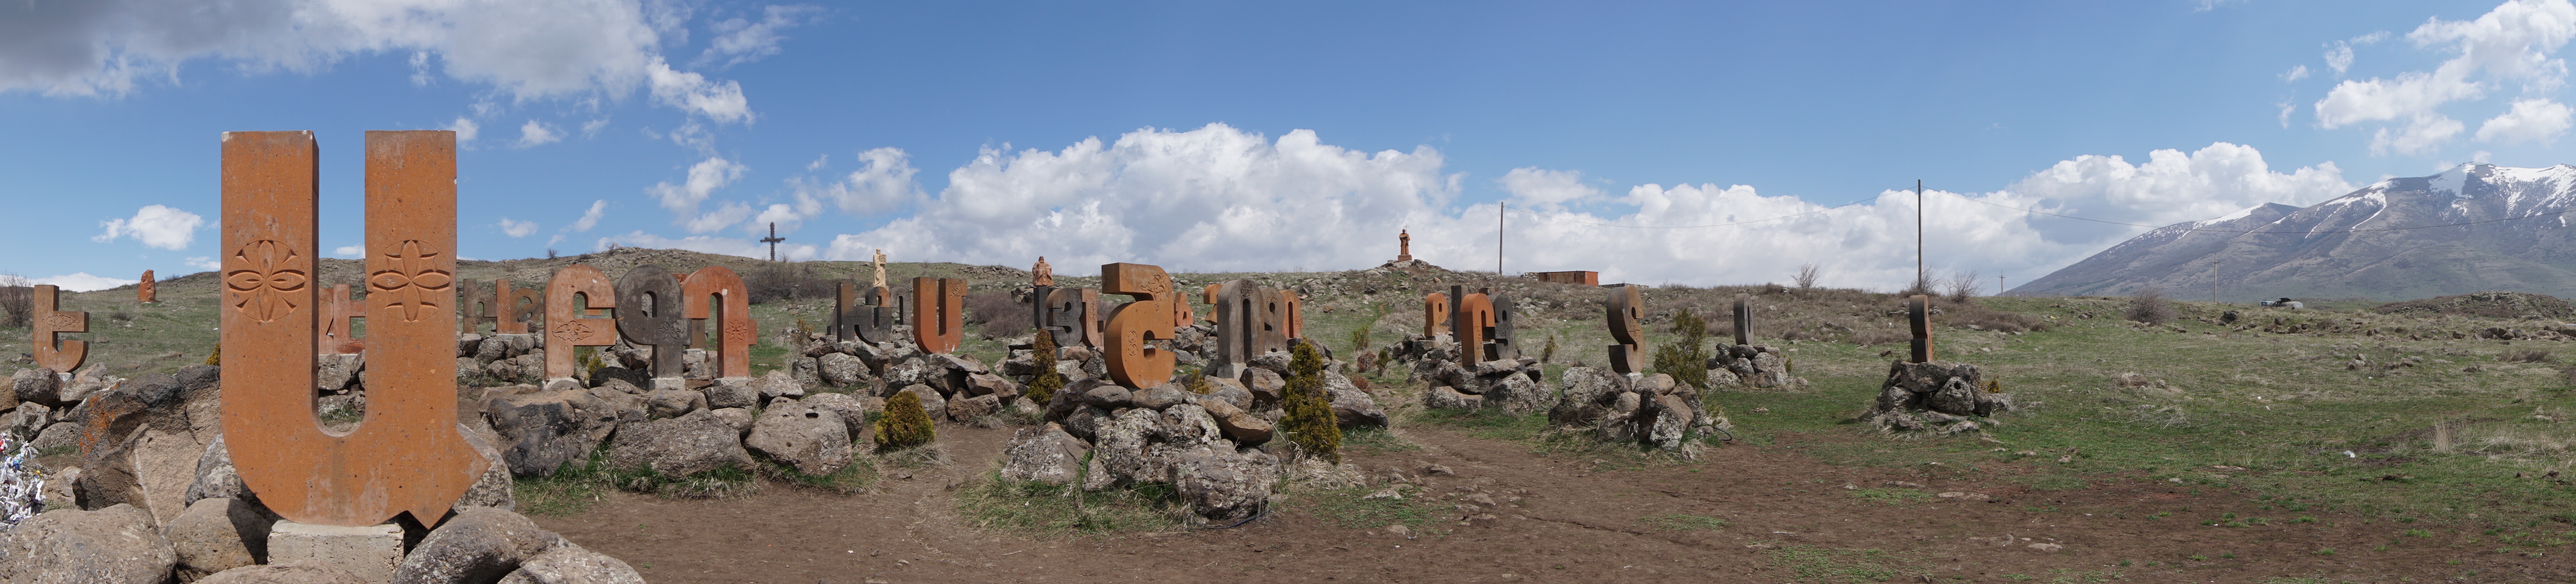 armenisches alphabet-monument